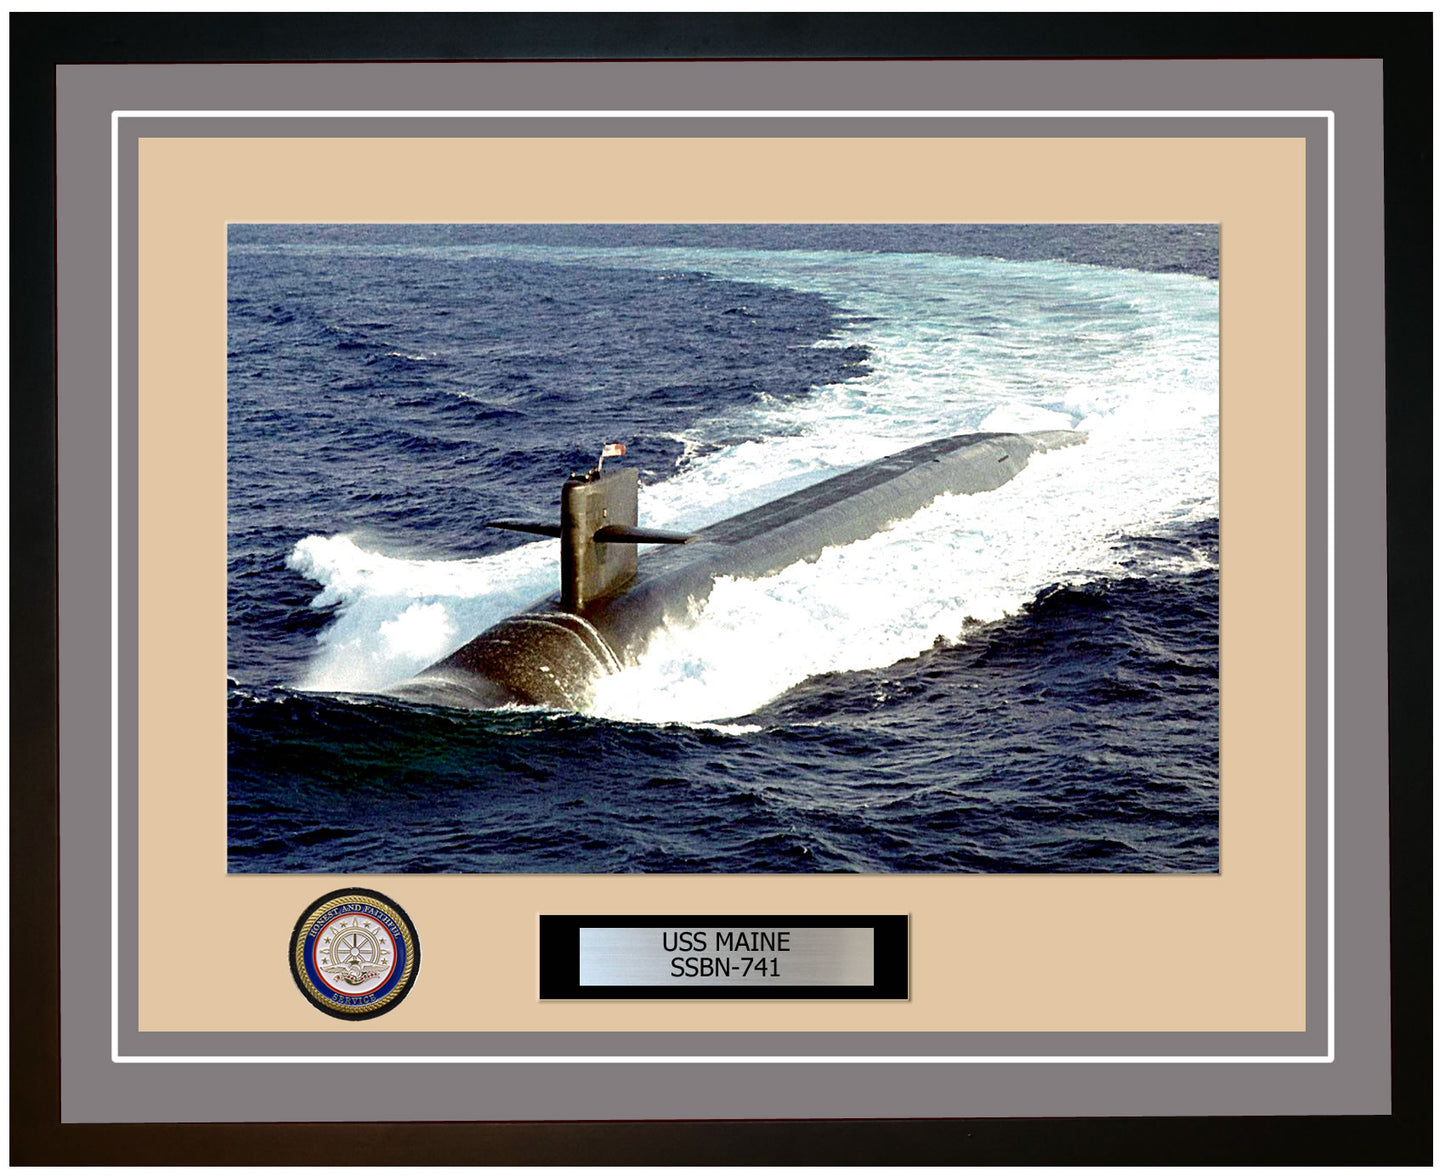 USS Maine SSBN-741 Framed Navy Ship Photo Grey